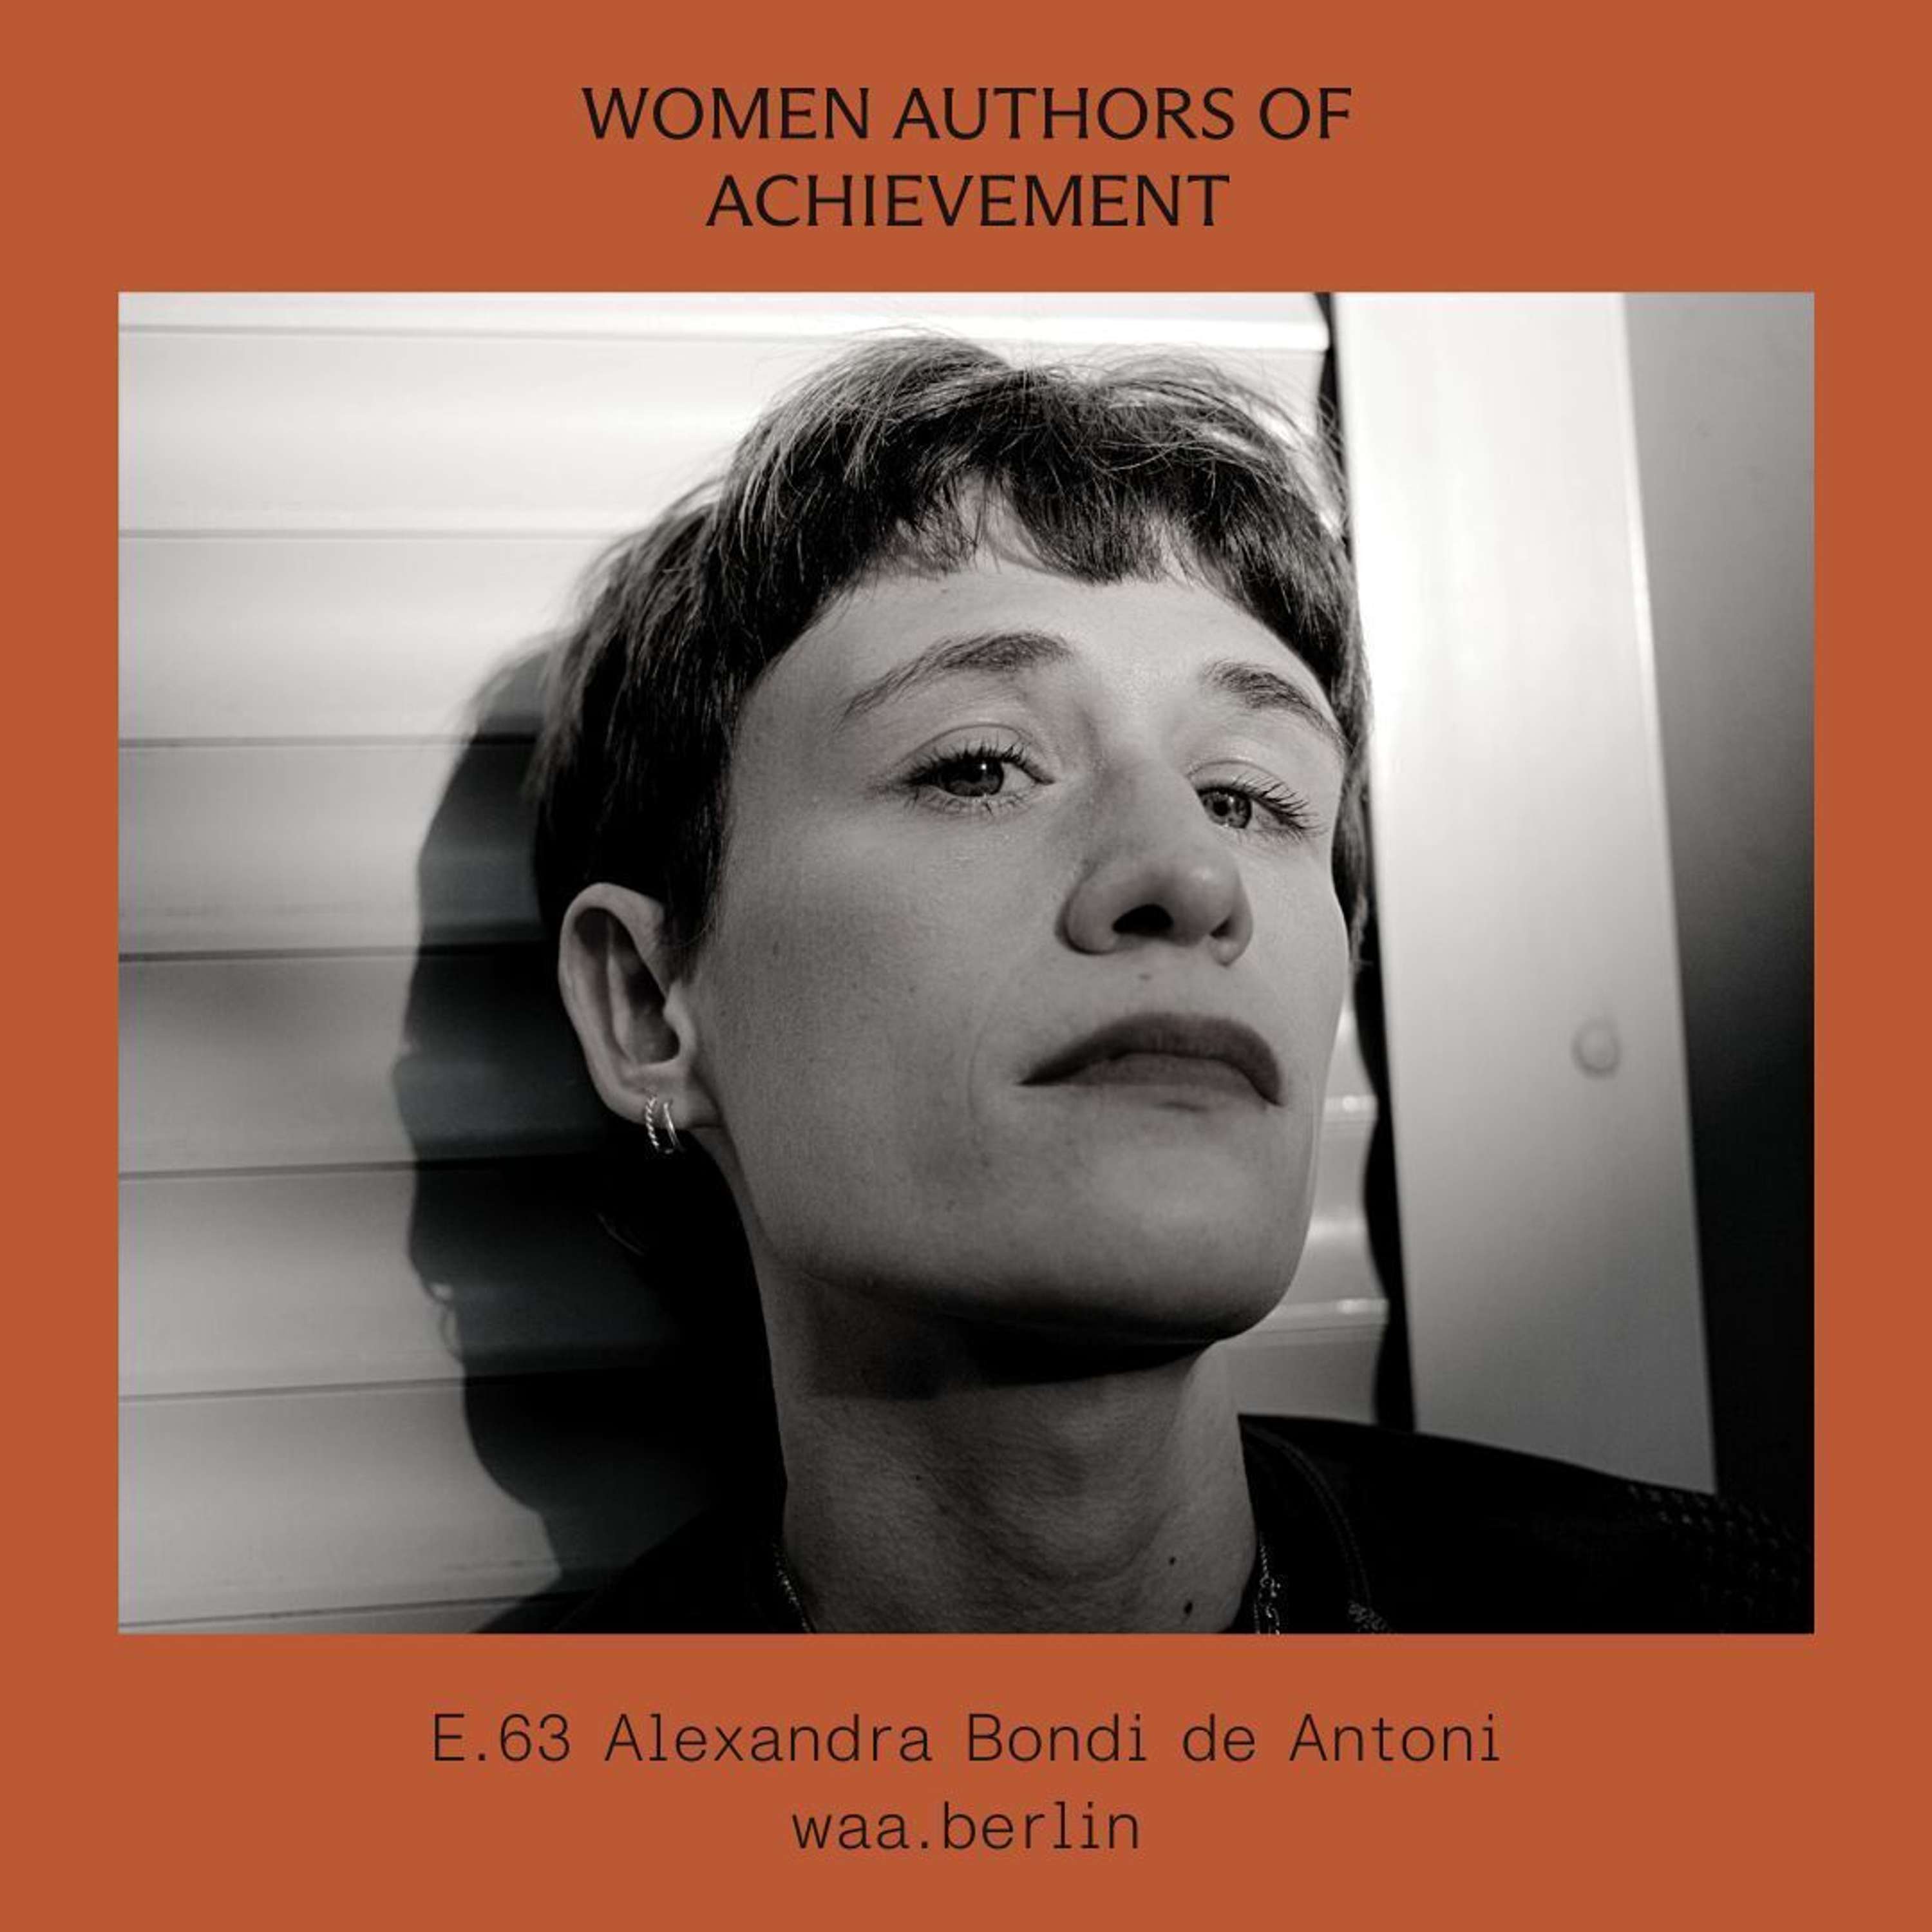 E.63 Breaking the stigma around burnout and mental health with Alexandra Bondi de Antoni